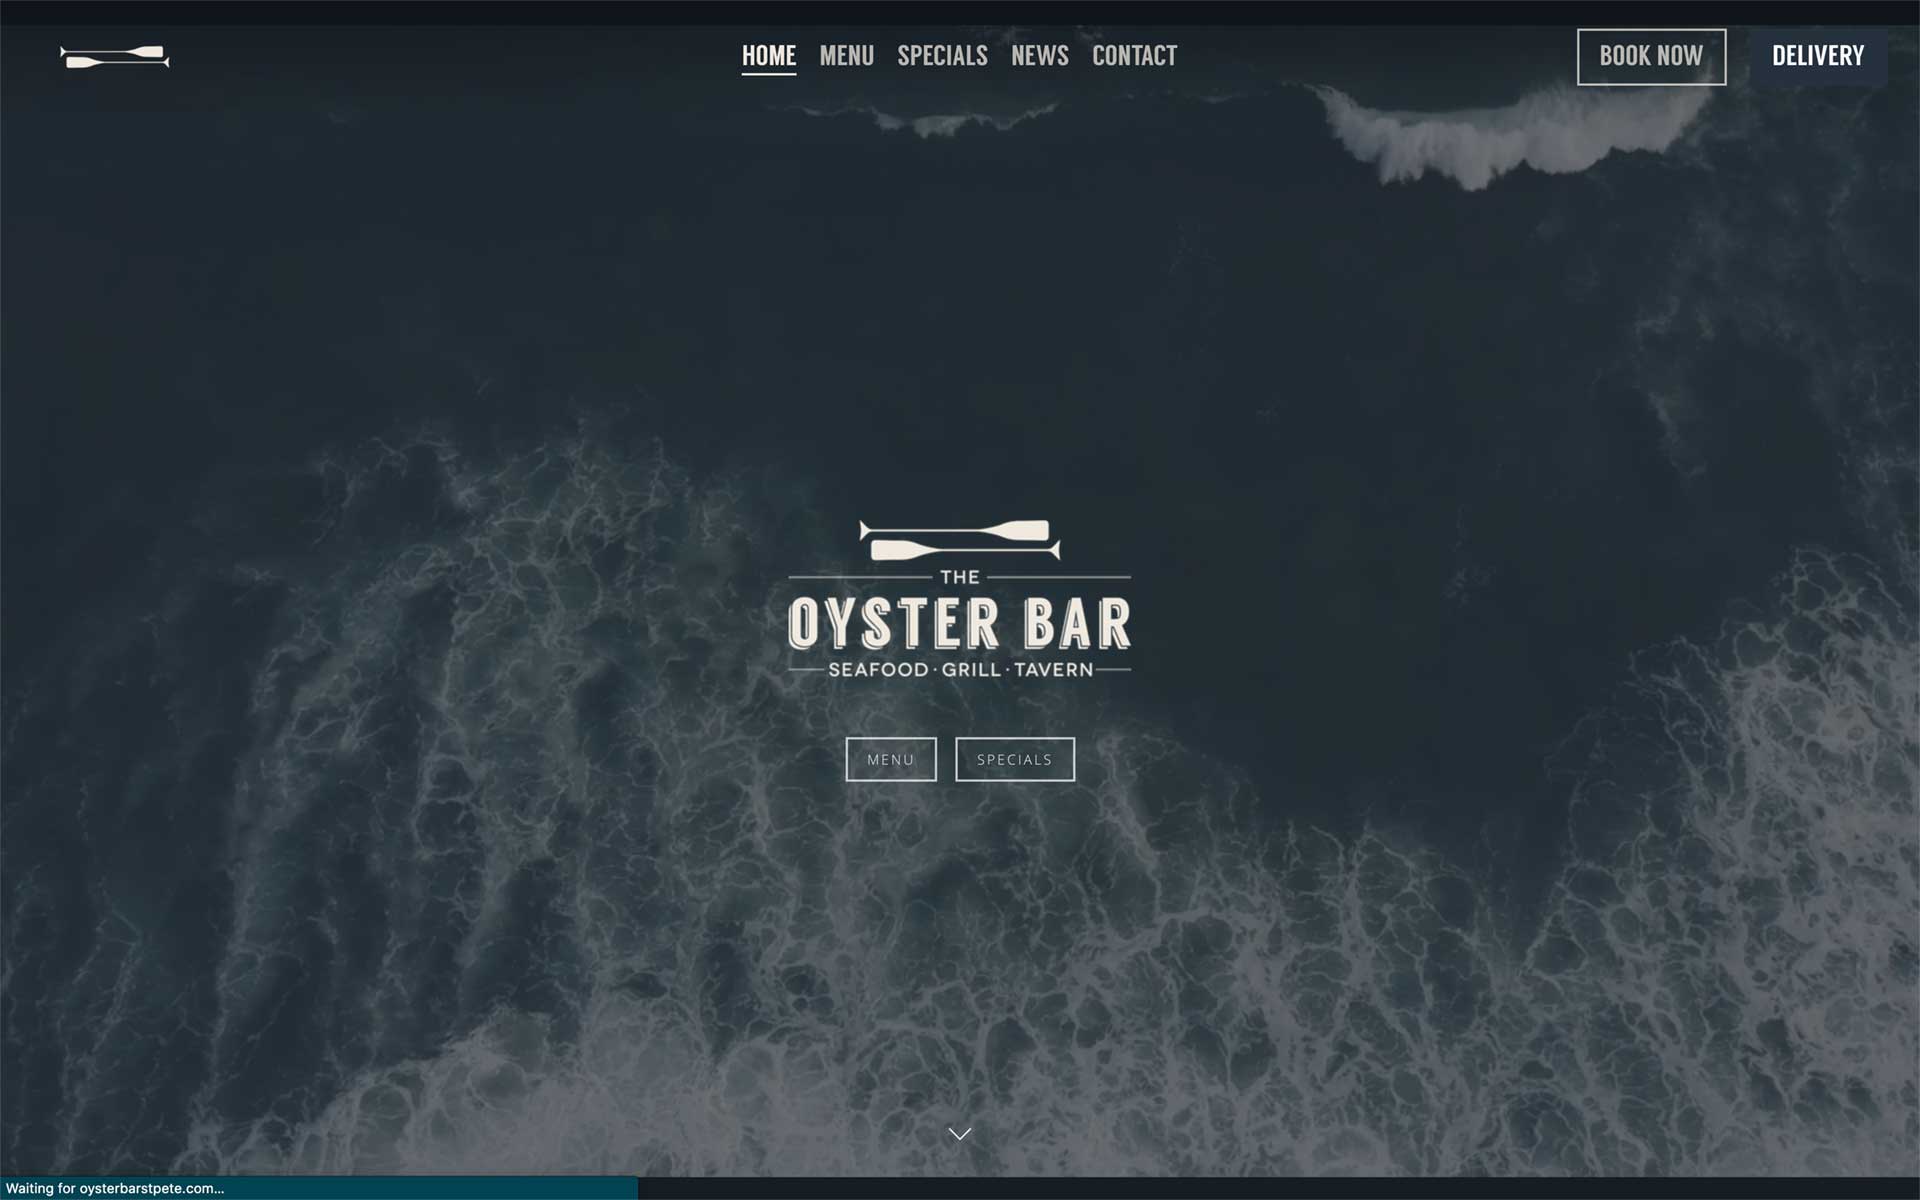 The Oyster Bar website